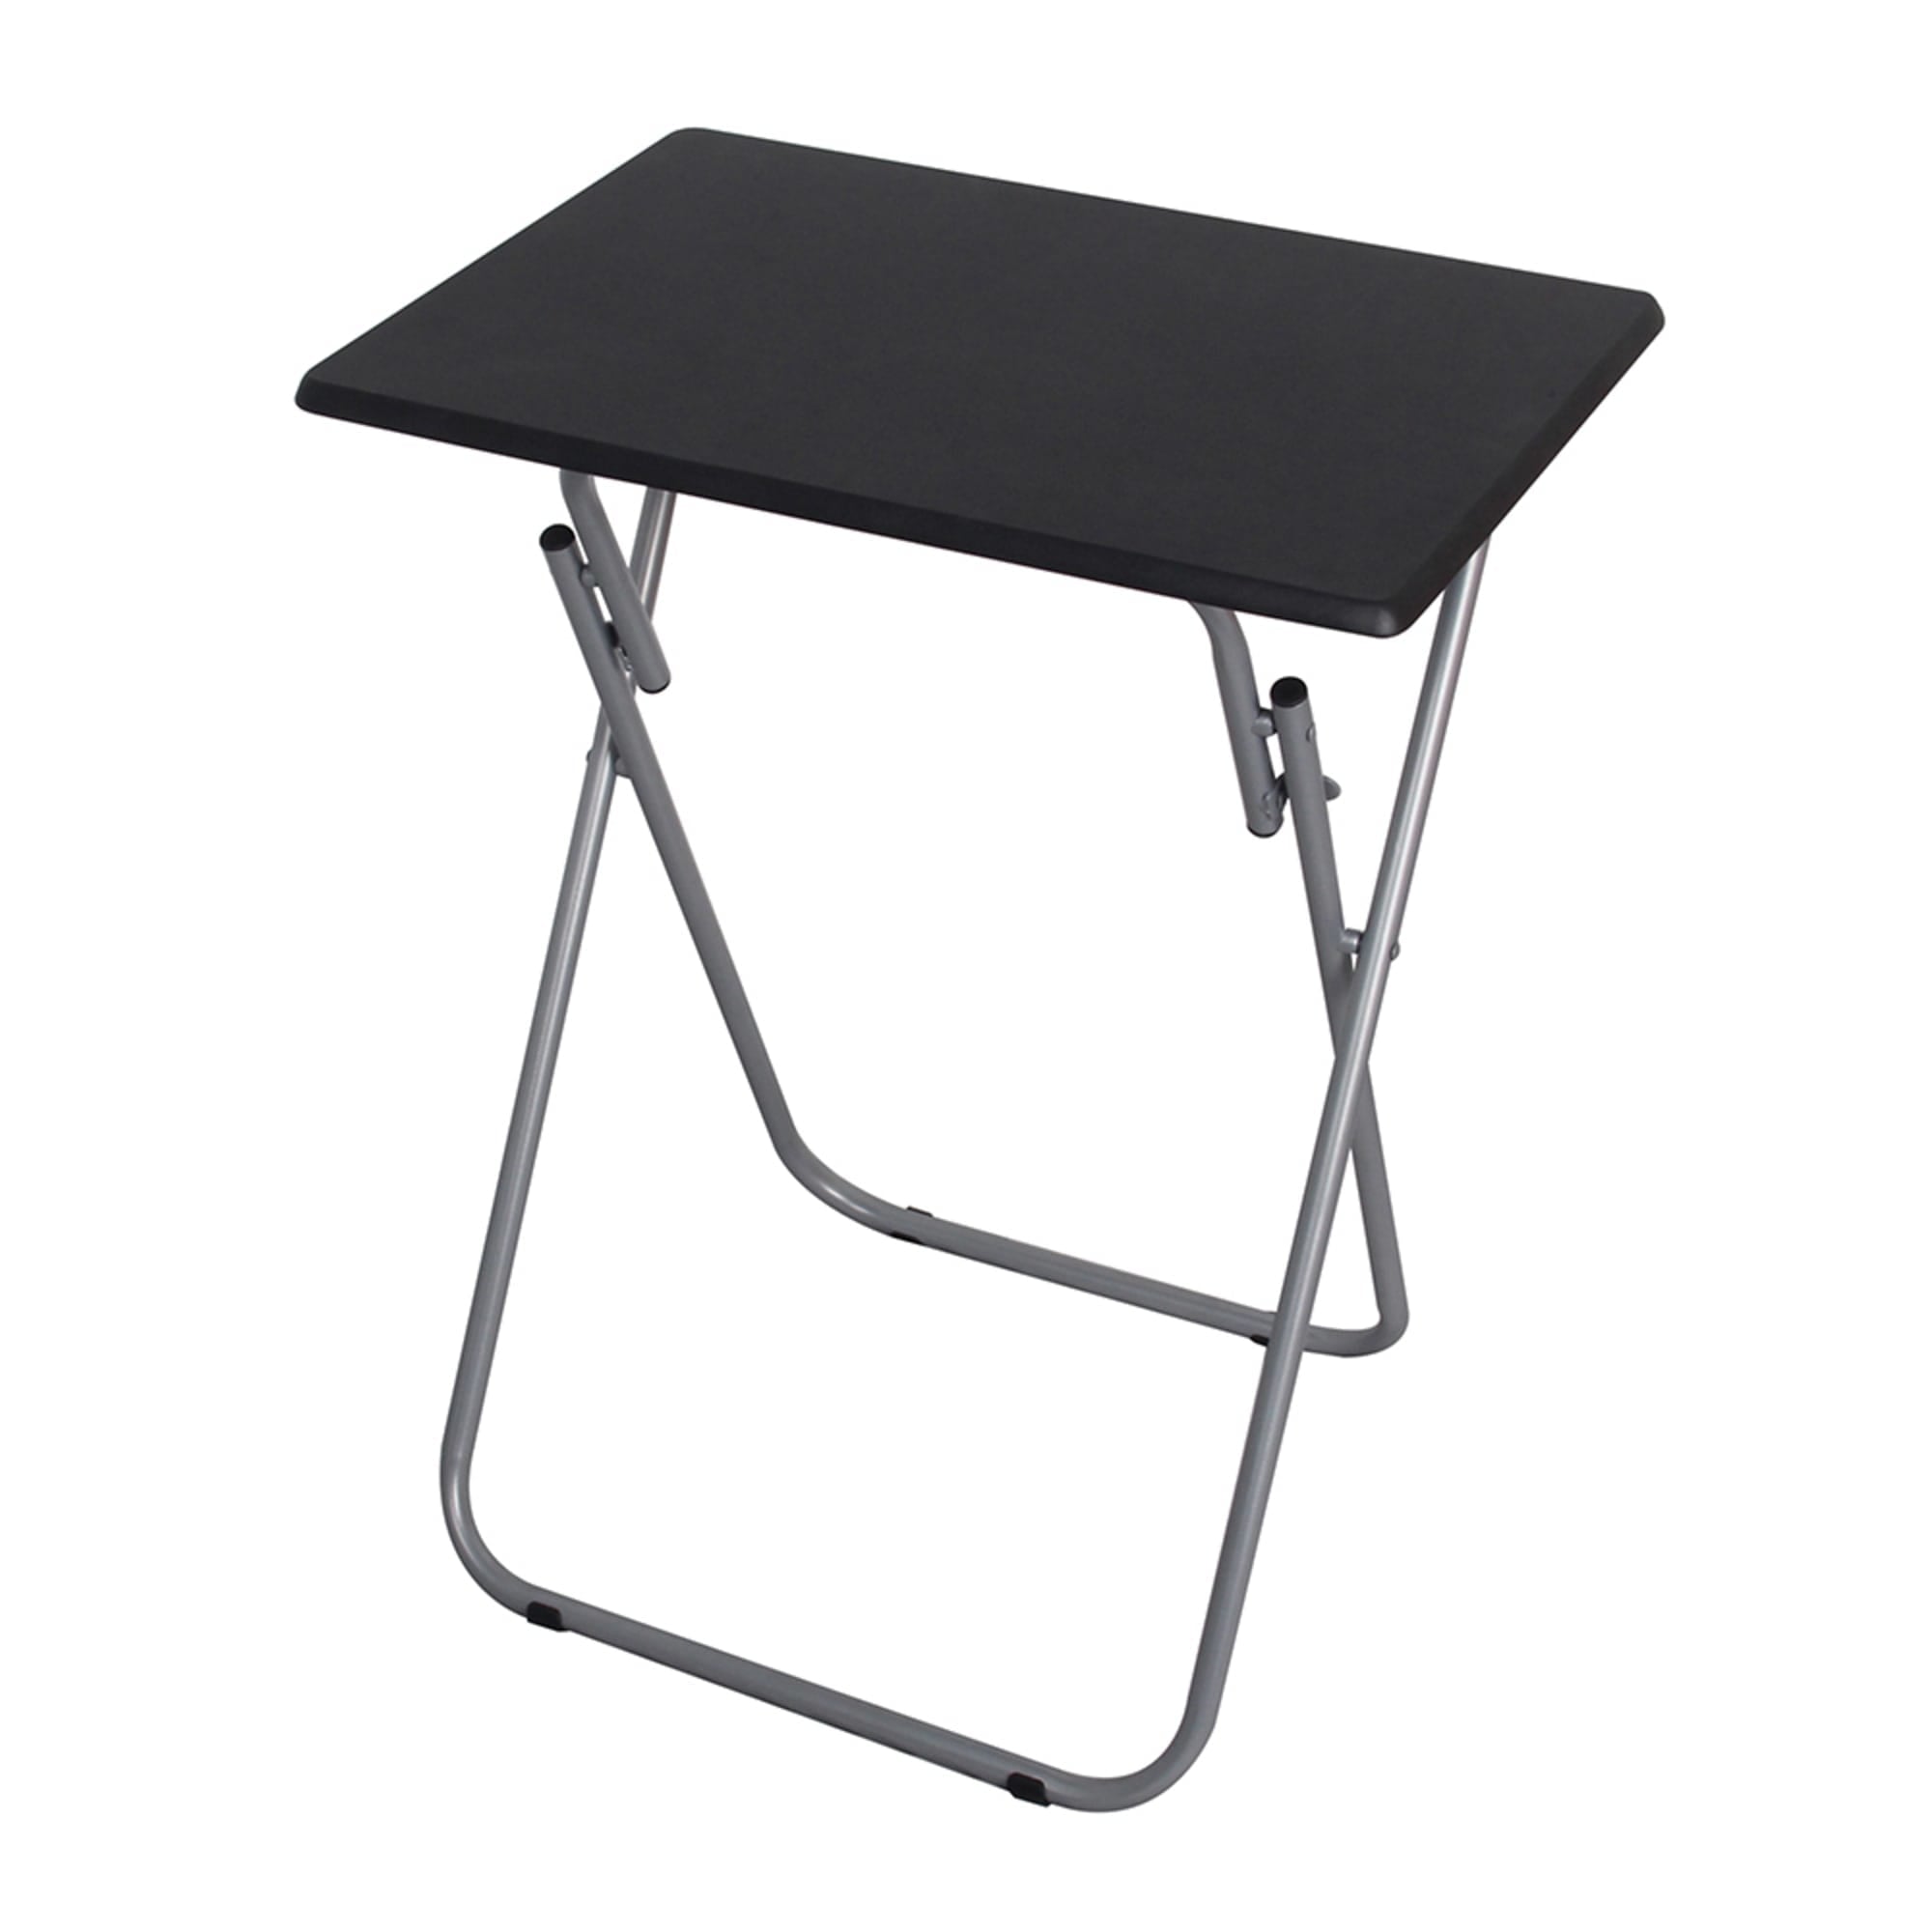 Home Basics Multi-Purpose Foldable Table, Black $15.00 EACH, CASE PACK OF 1